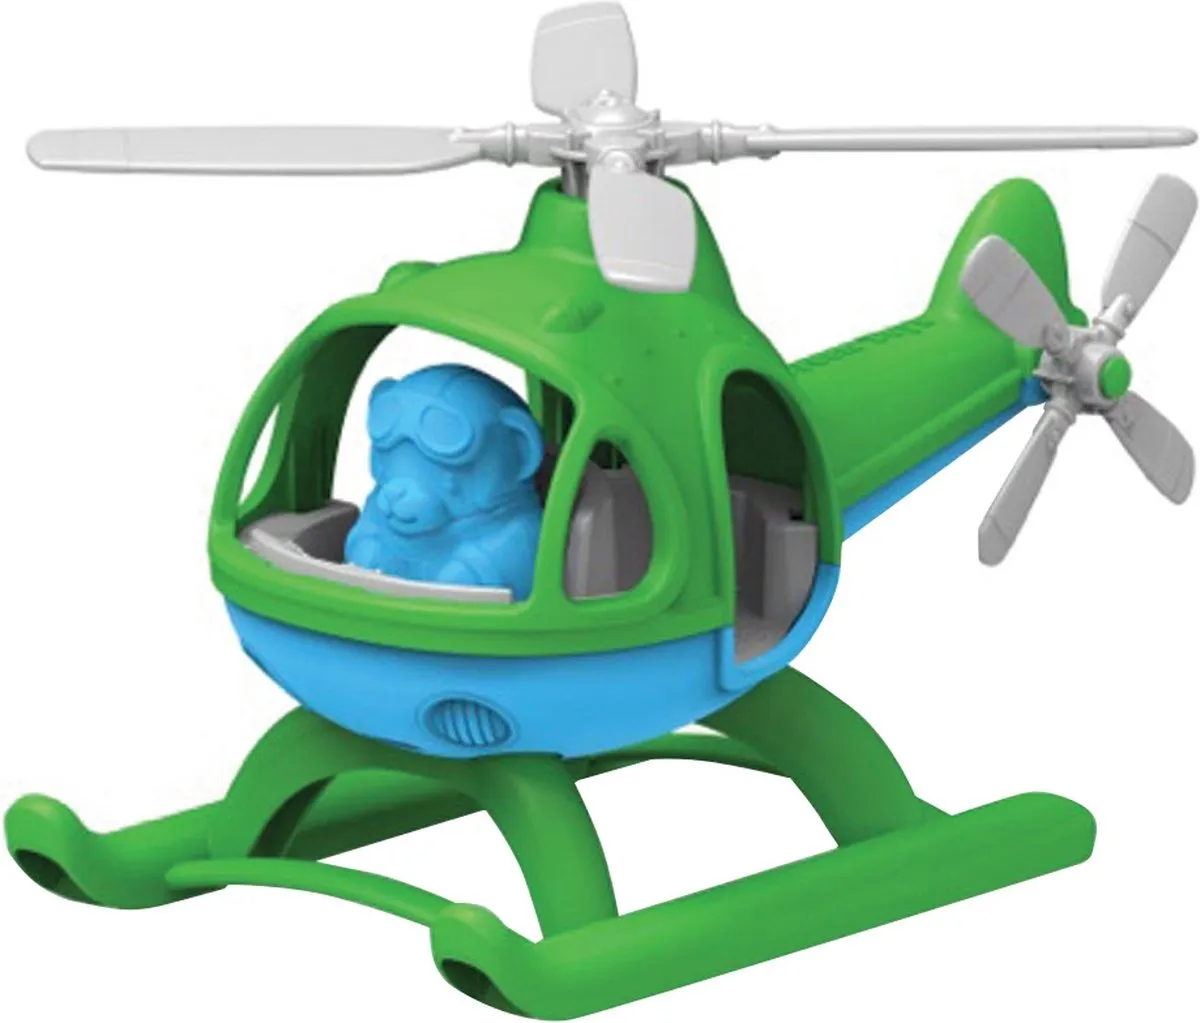 Speelgoed helicopter groen - Green Toys speelgoed